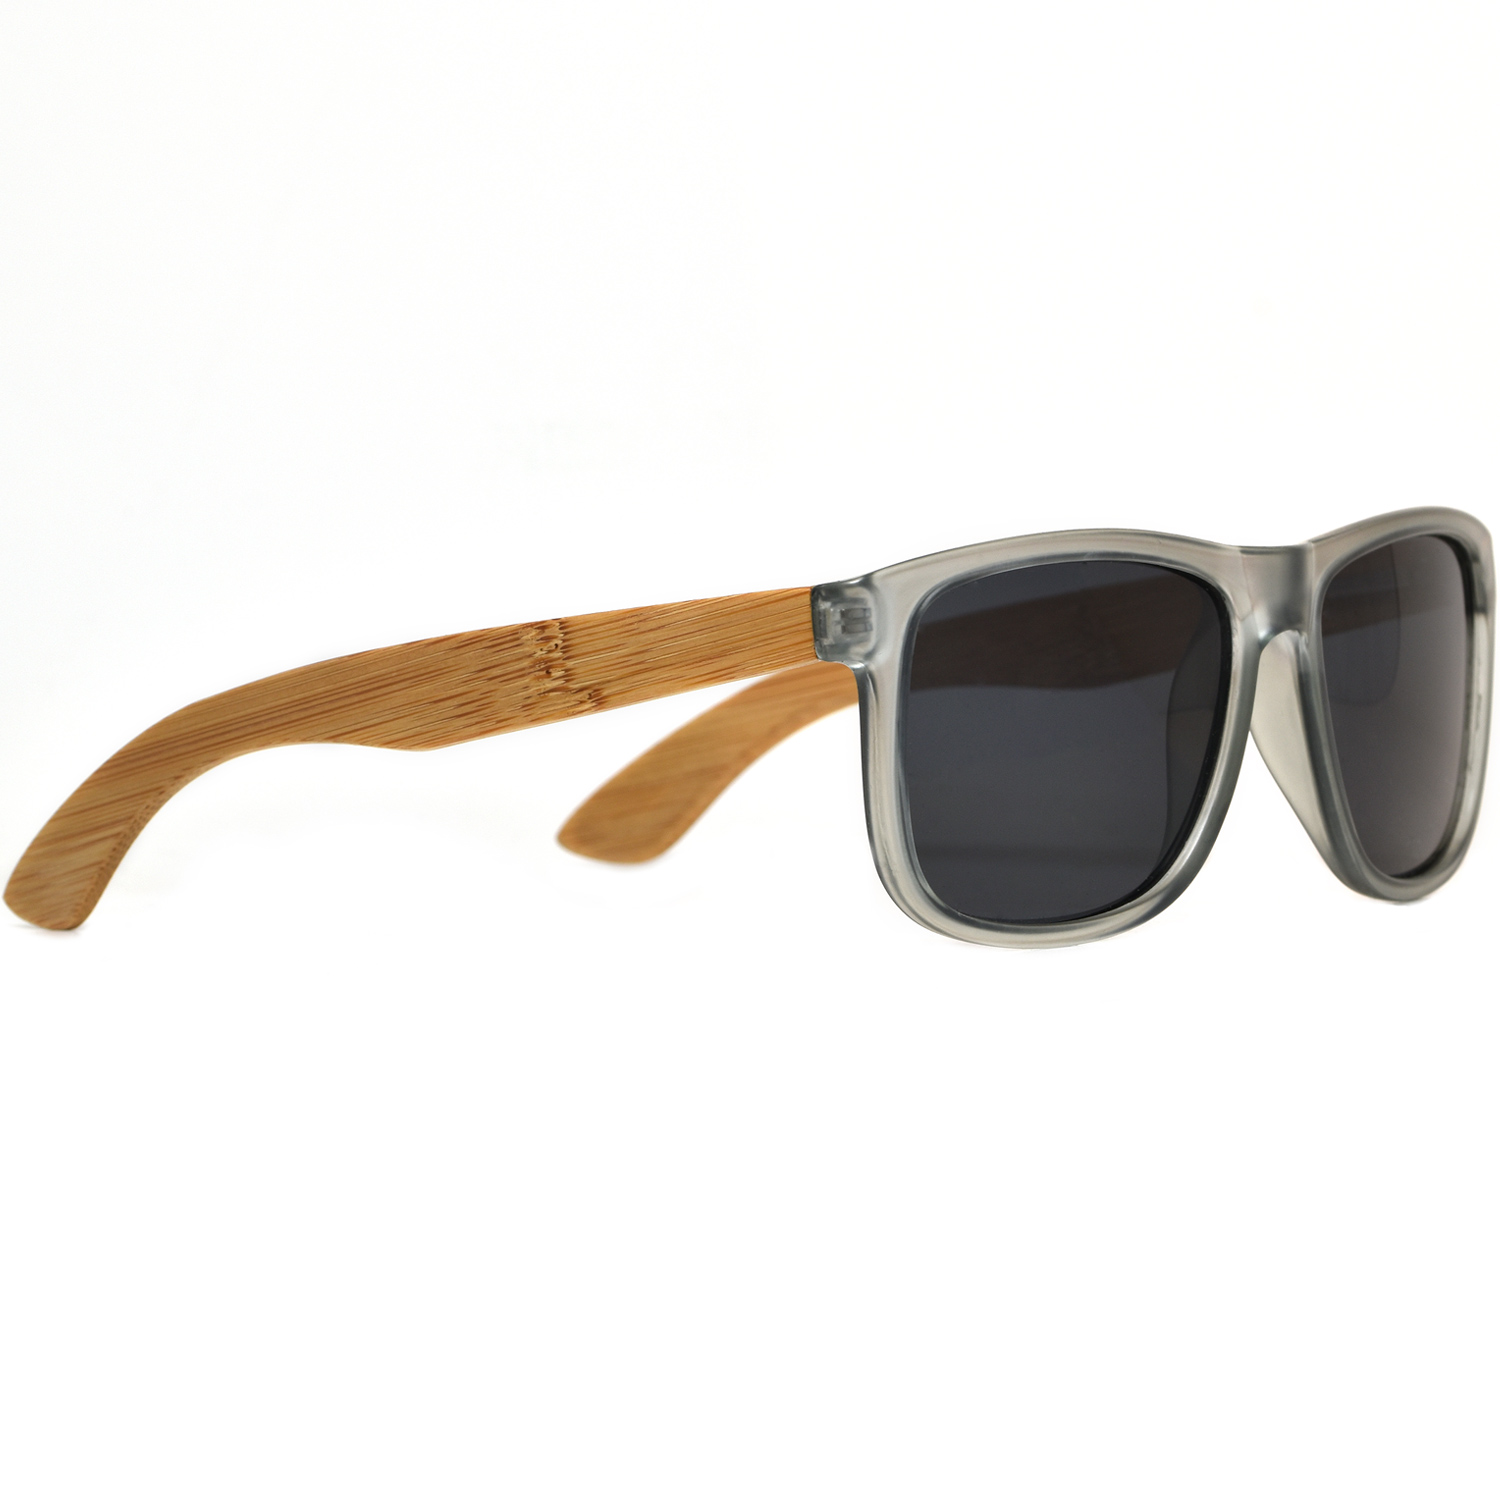 Square bamboo wood sunglasses black polarized lenses bamboo box